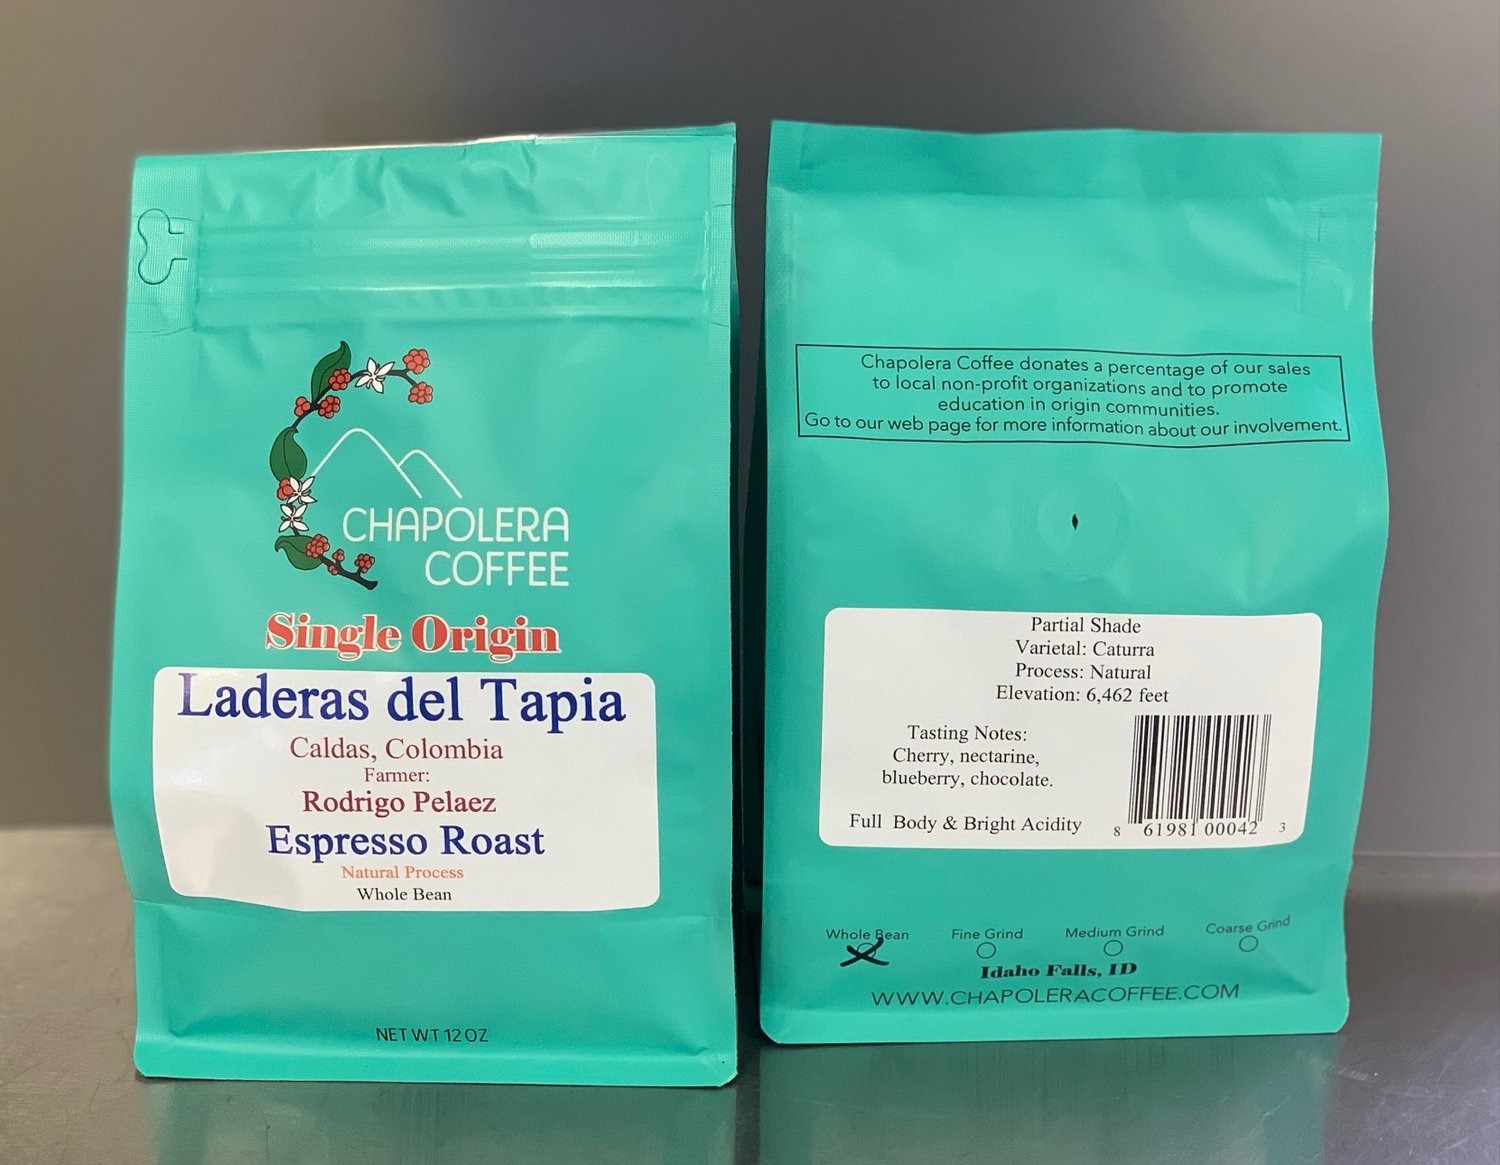 Store 2 — Chapolera Coffee